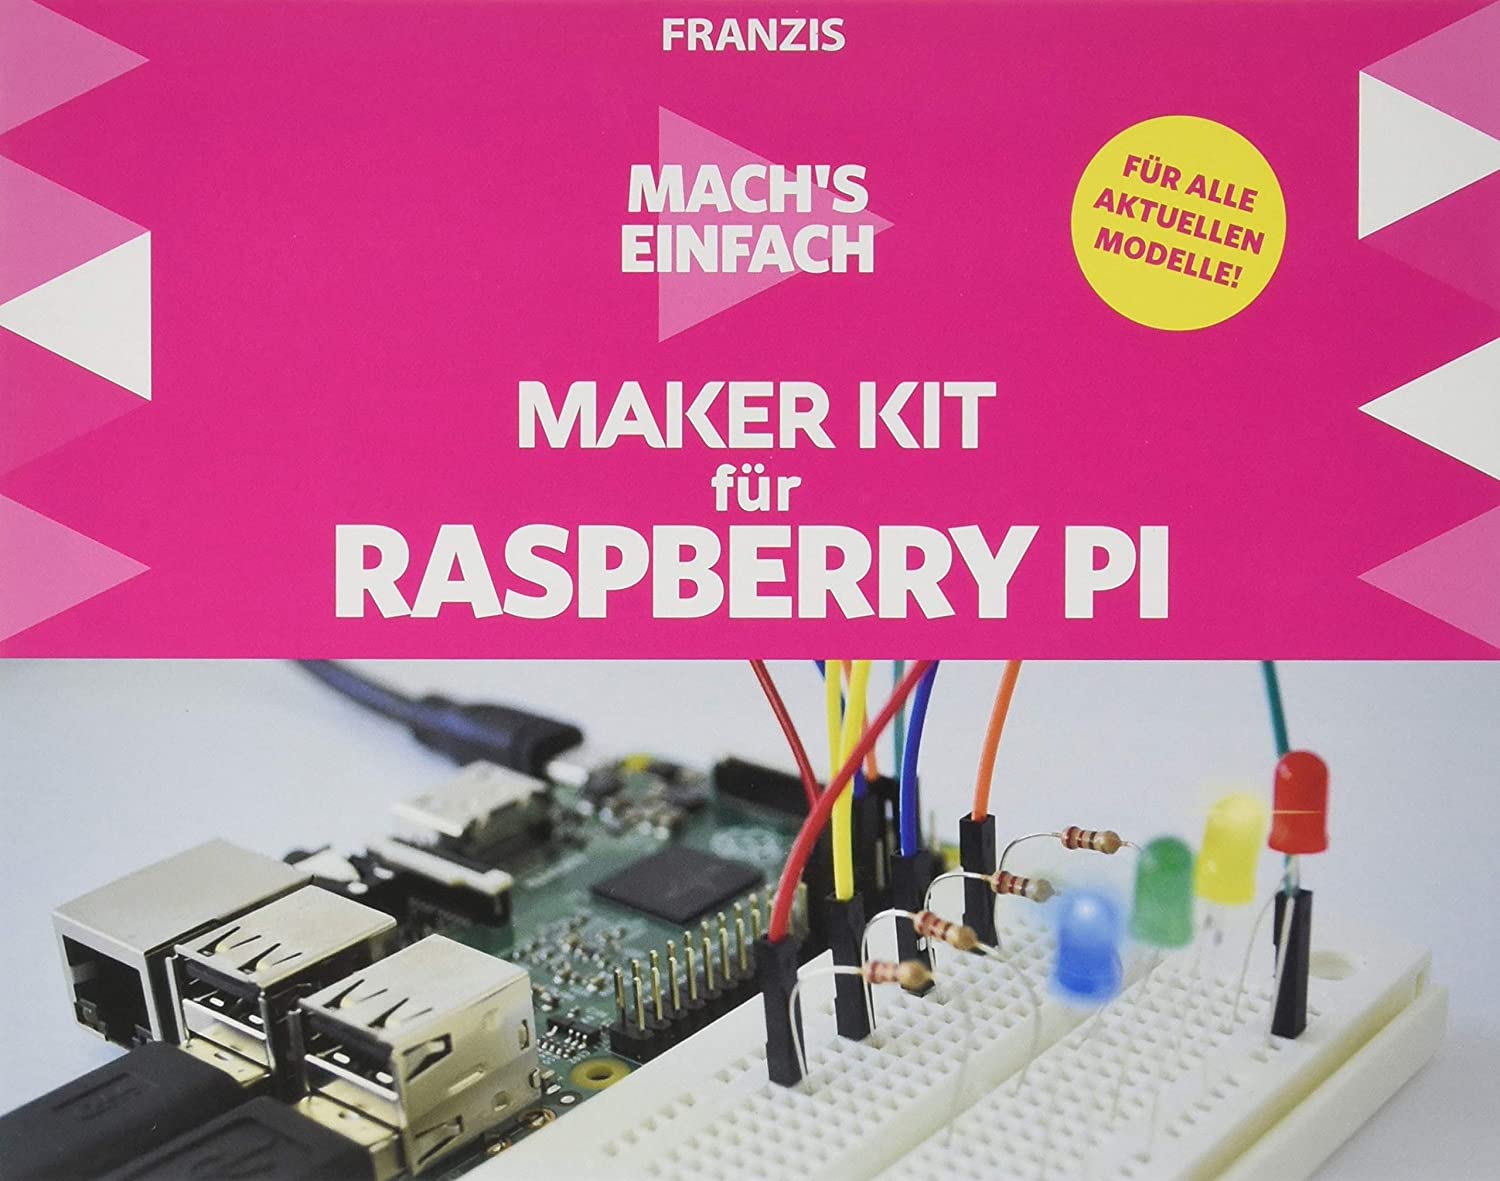 Franzis Machs Simple: Maker Kit For Raspberry Pi | No Previous Knowledge R